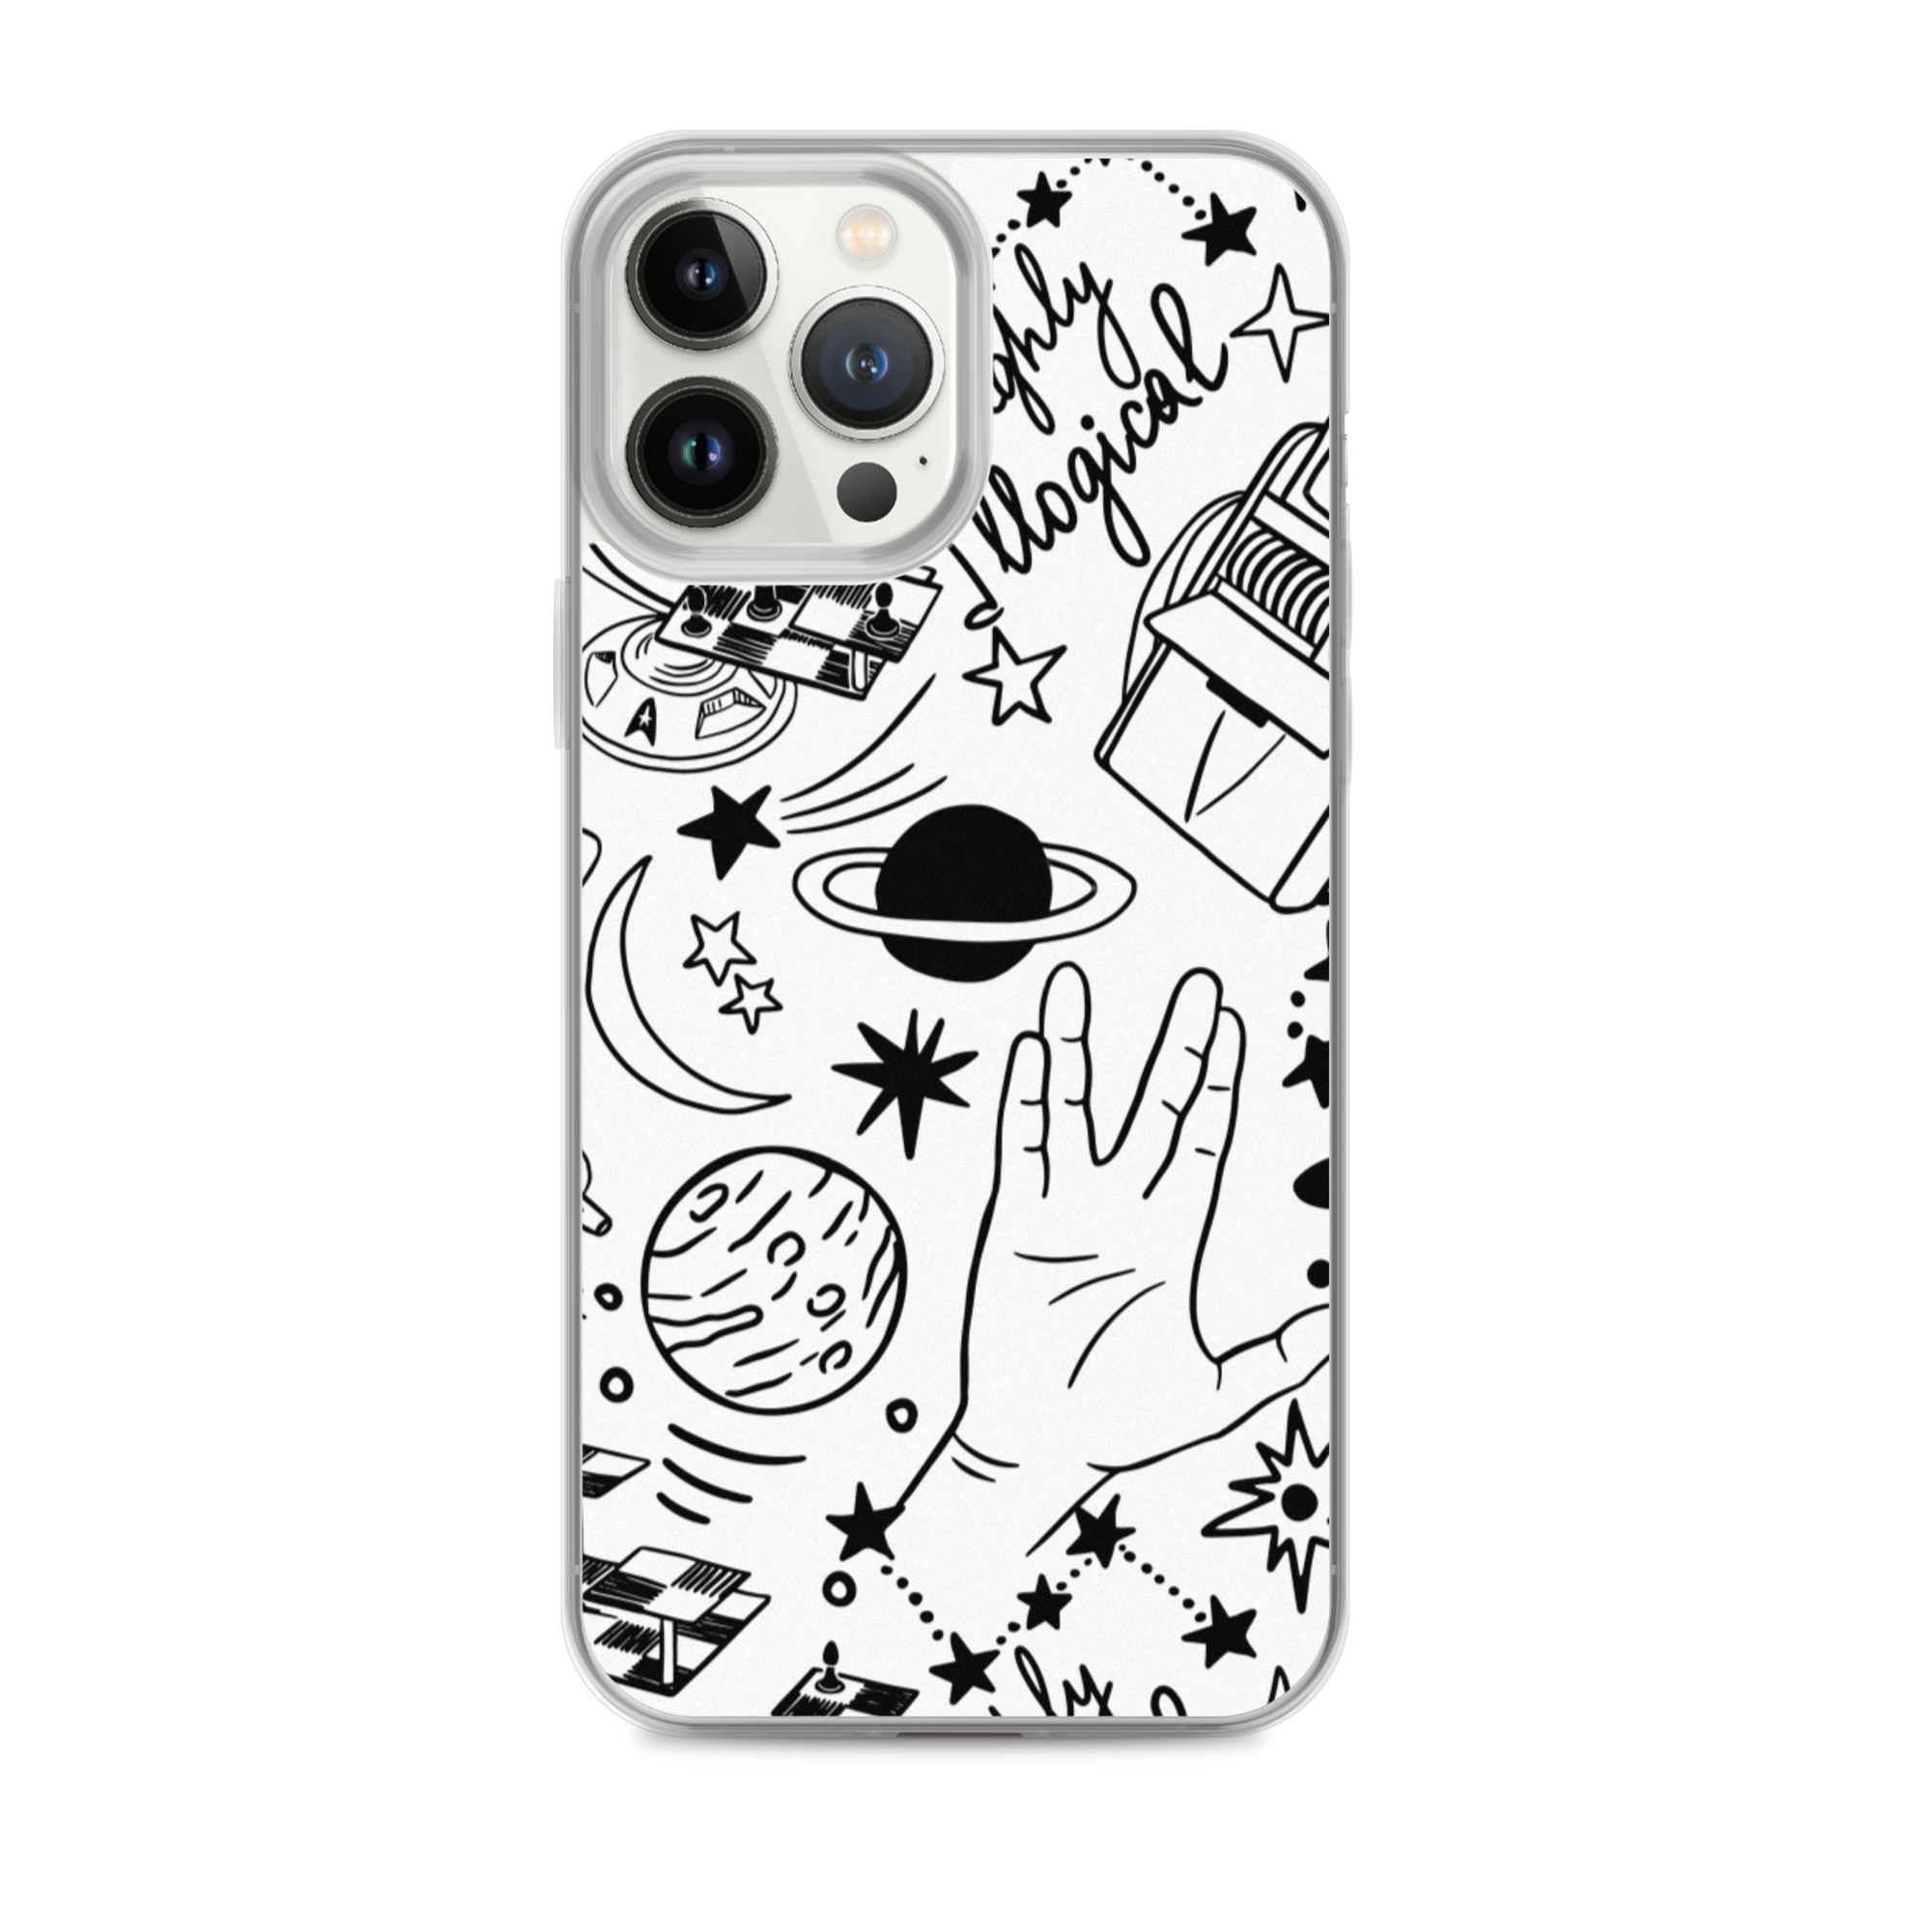 Trekkie Sketch iPhone Case